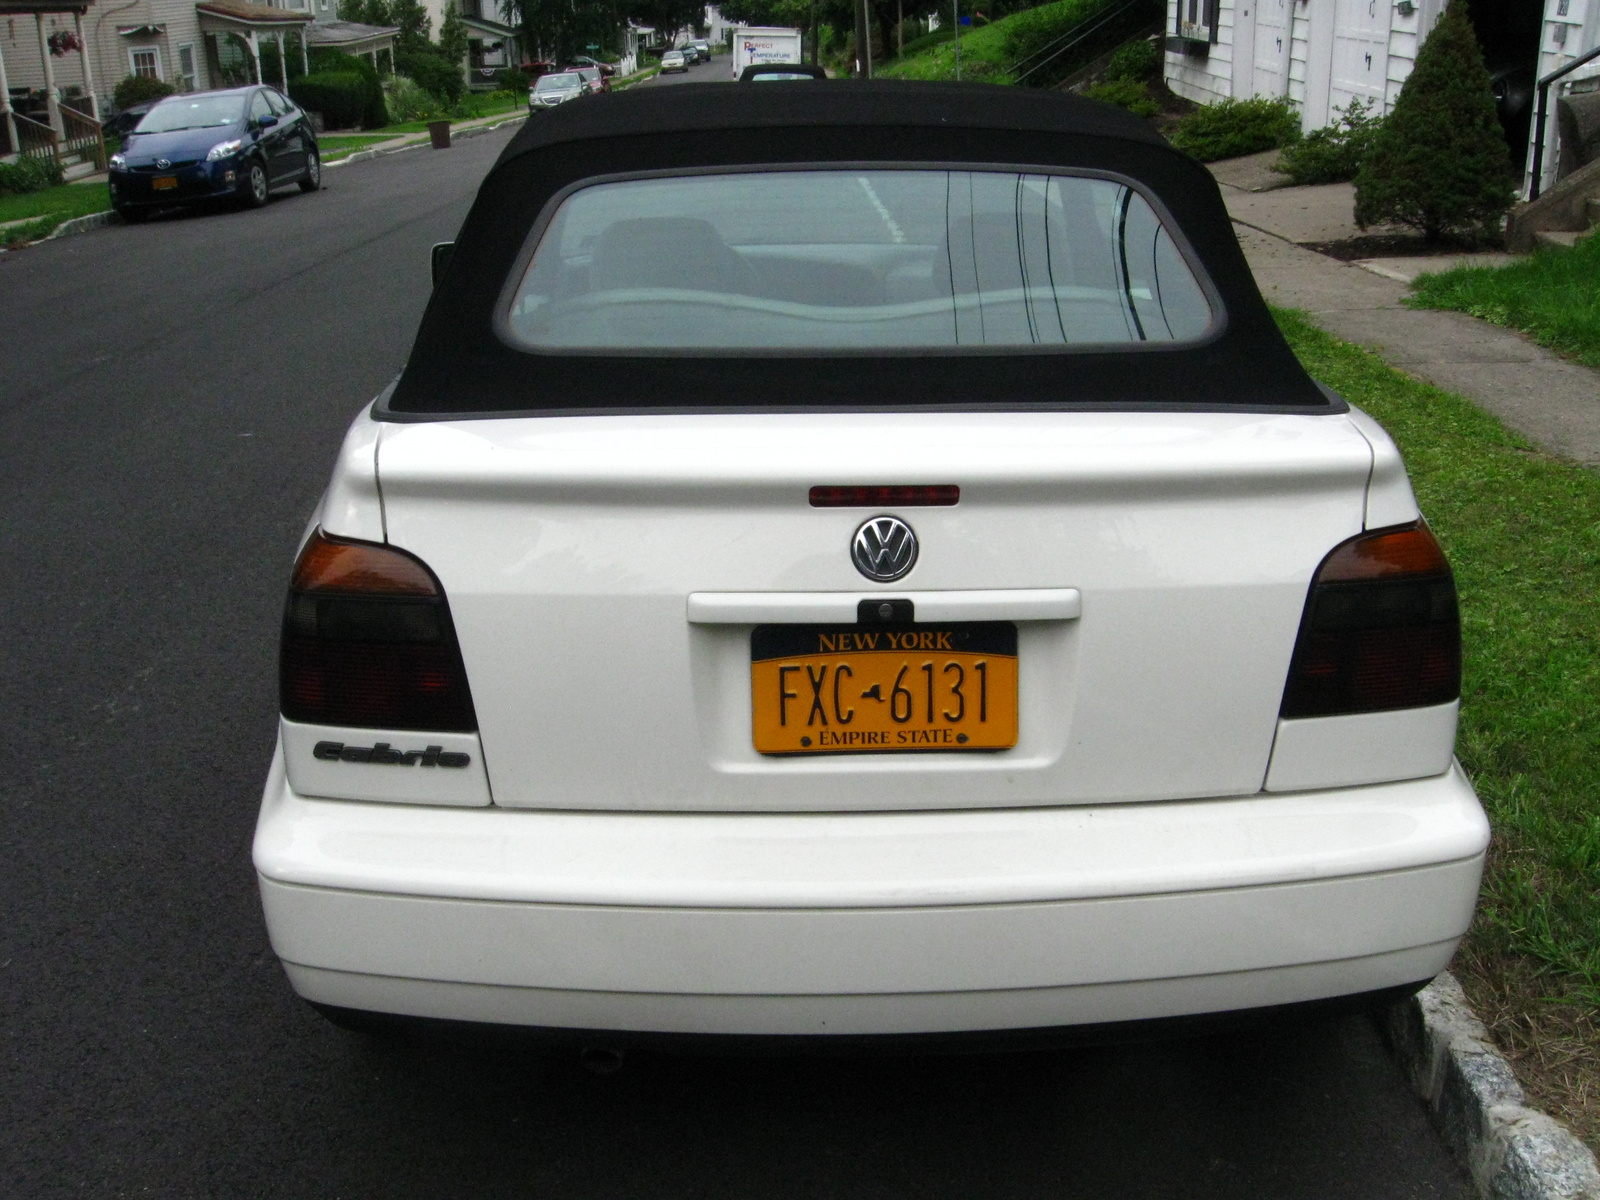 1998 Volkswagen Cabrio Overview. 1998 Volkswagen Cabrio